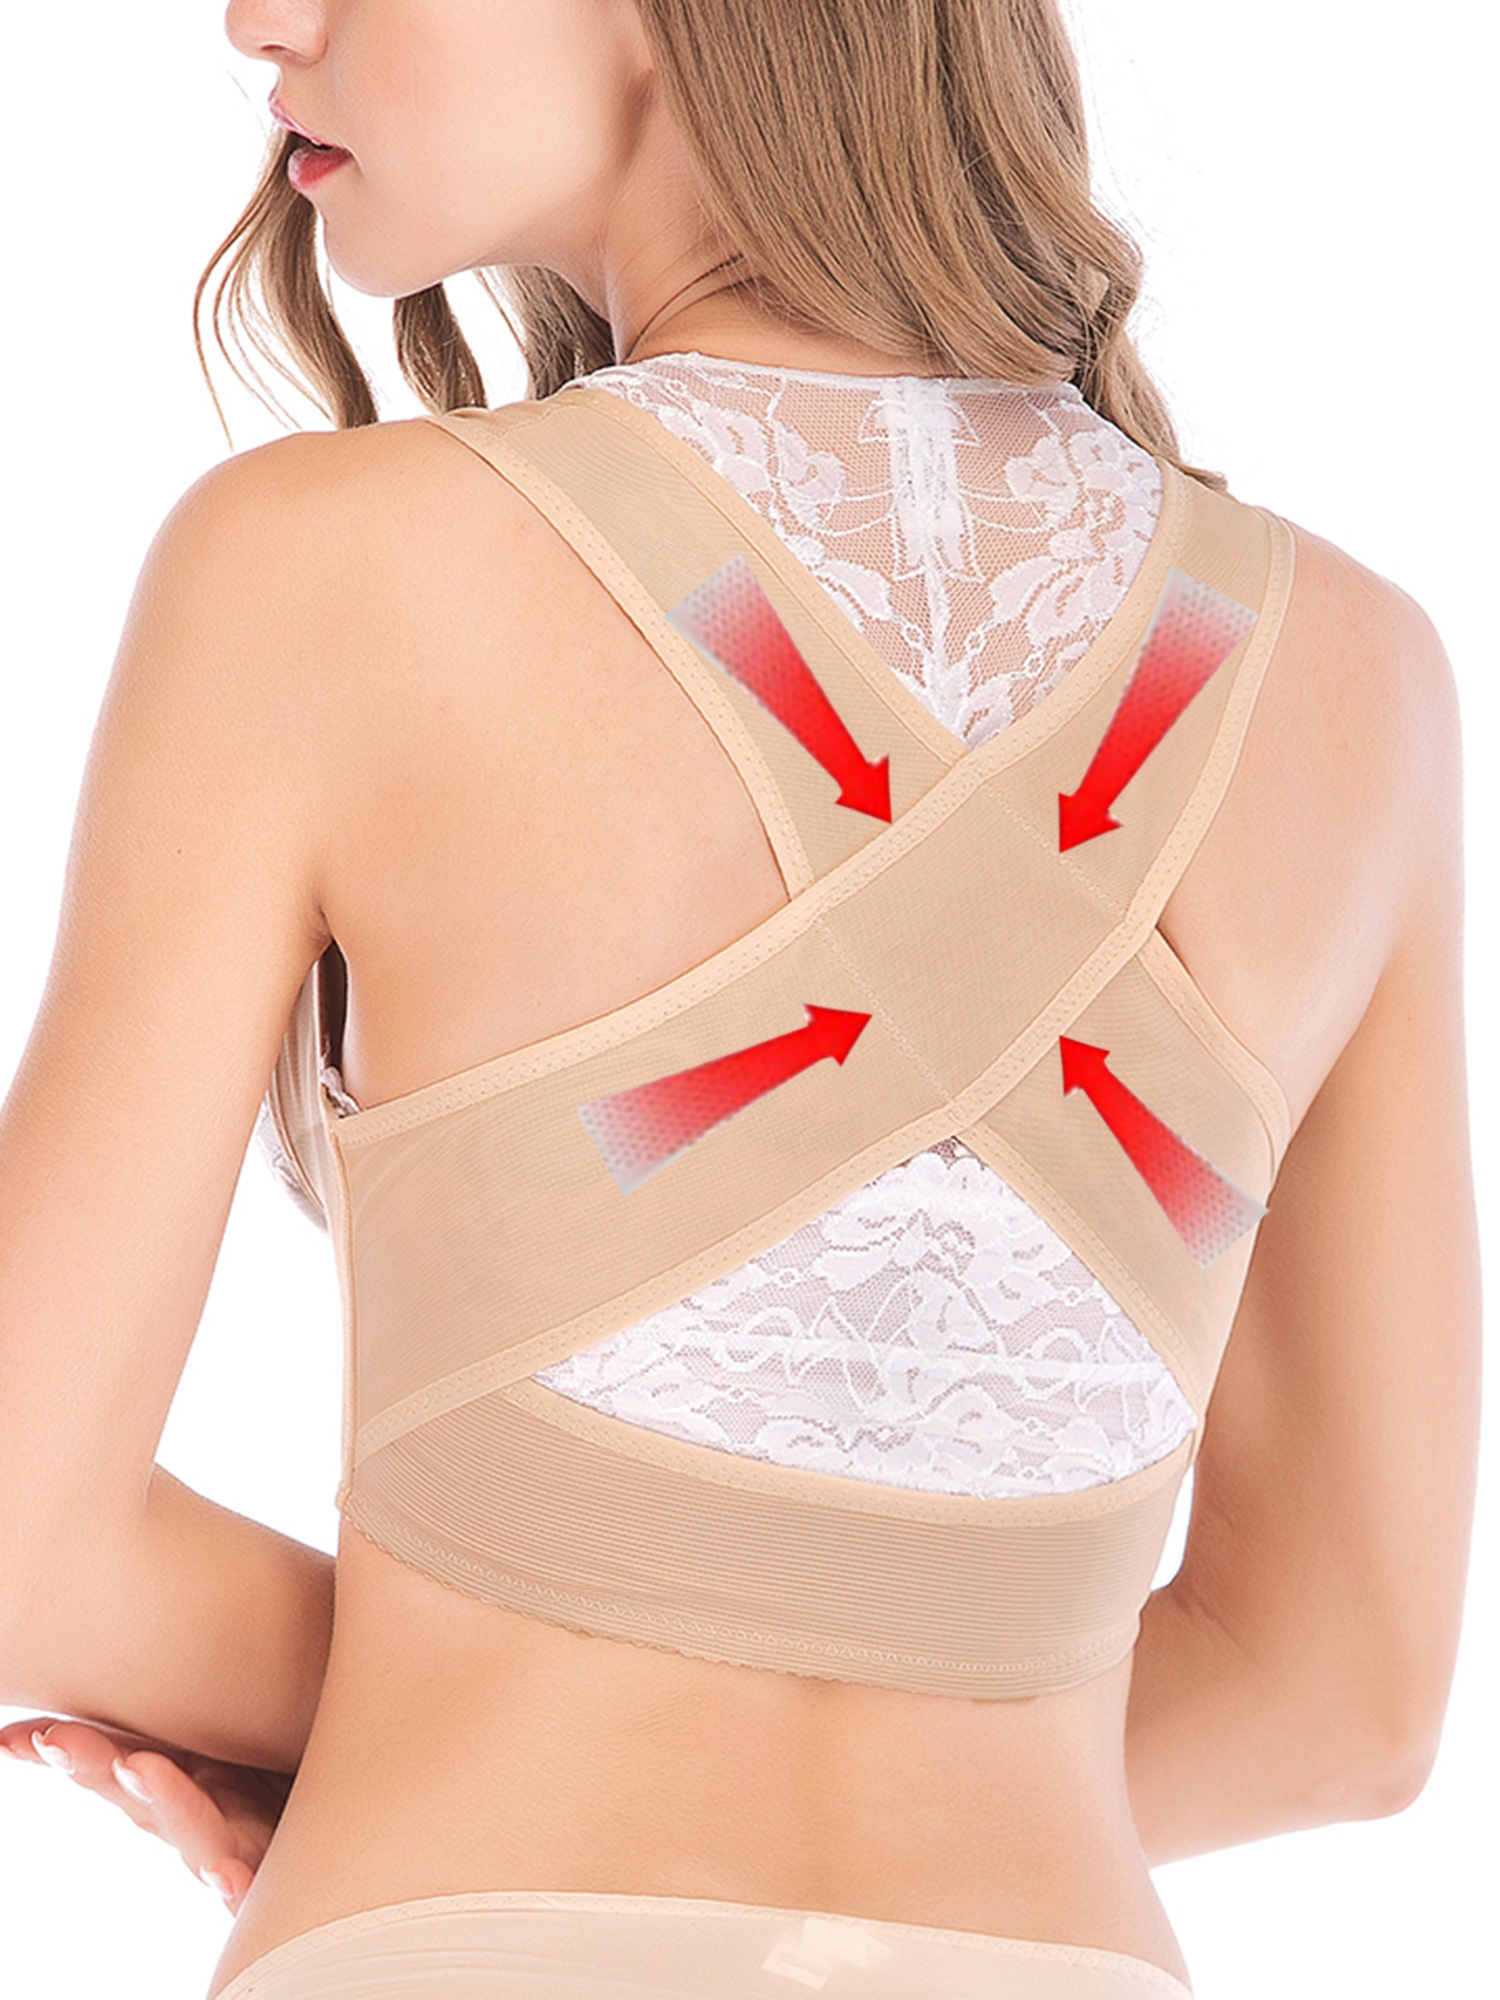 LELINTA Women's Posture Corrector Chest Brace Up Back Support Bra Shaper Vest Breast Lifter Shapewear Support Belt Vest Health Care Body Cheat Shapers,2PCS - image 1 of 8